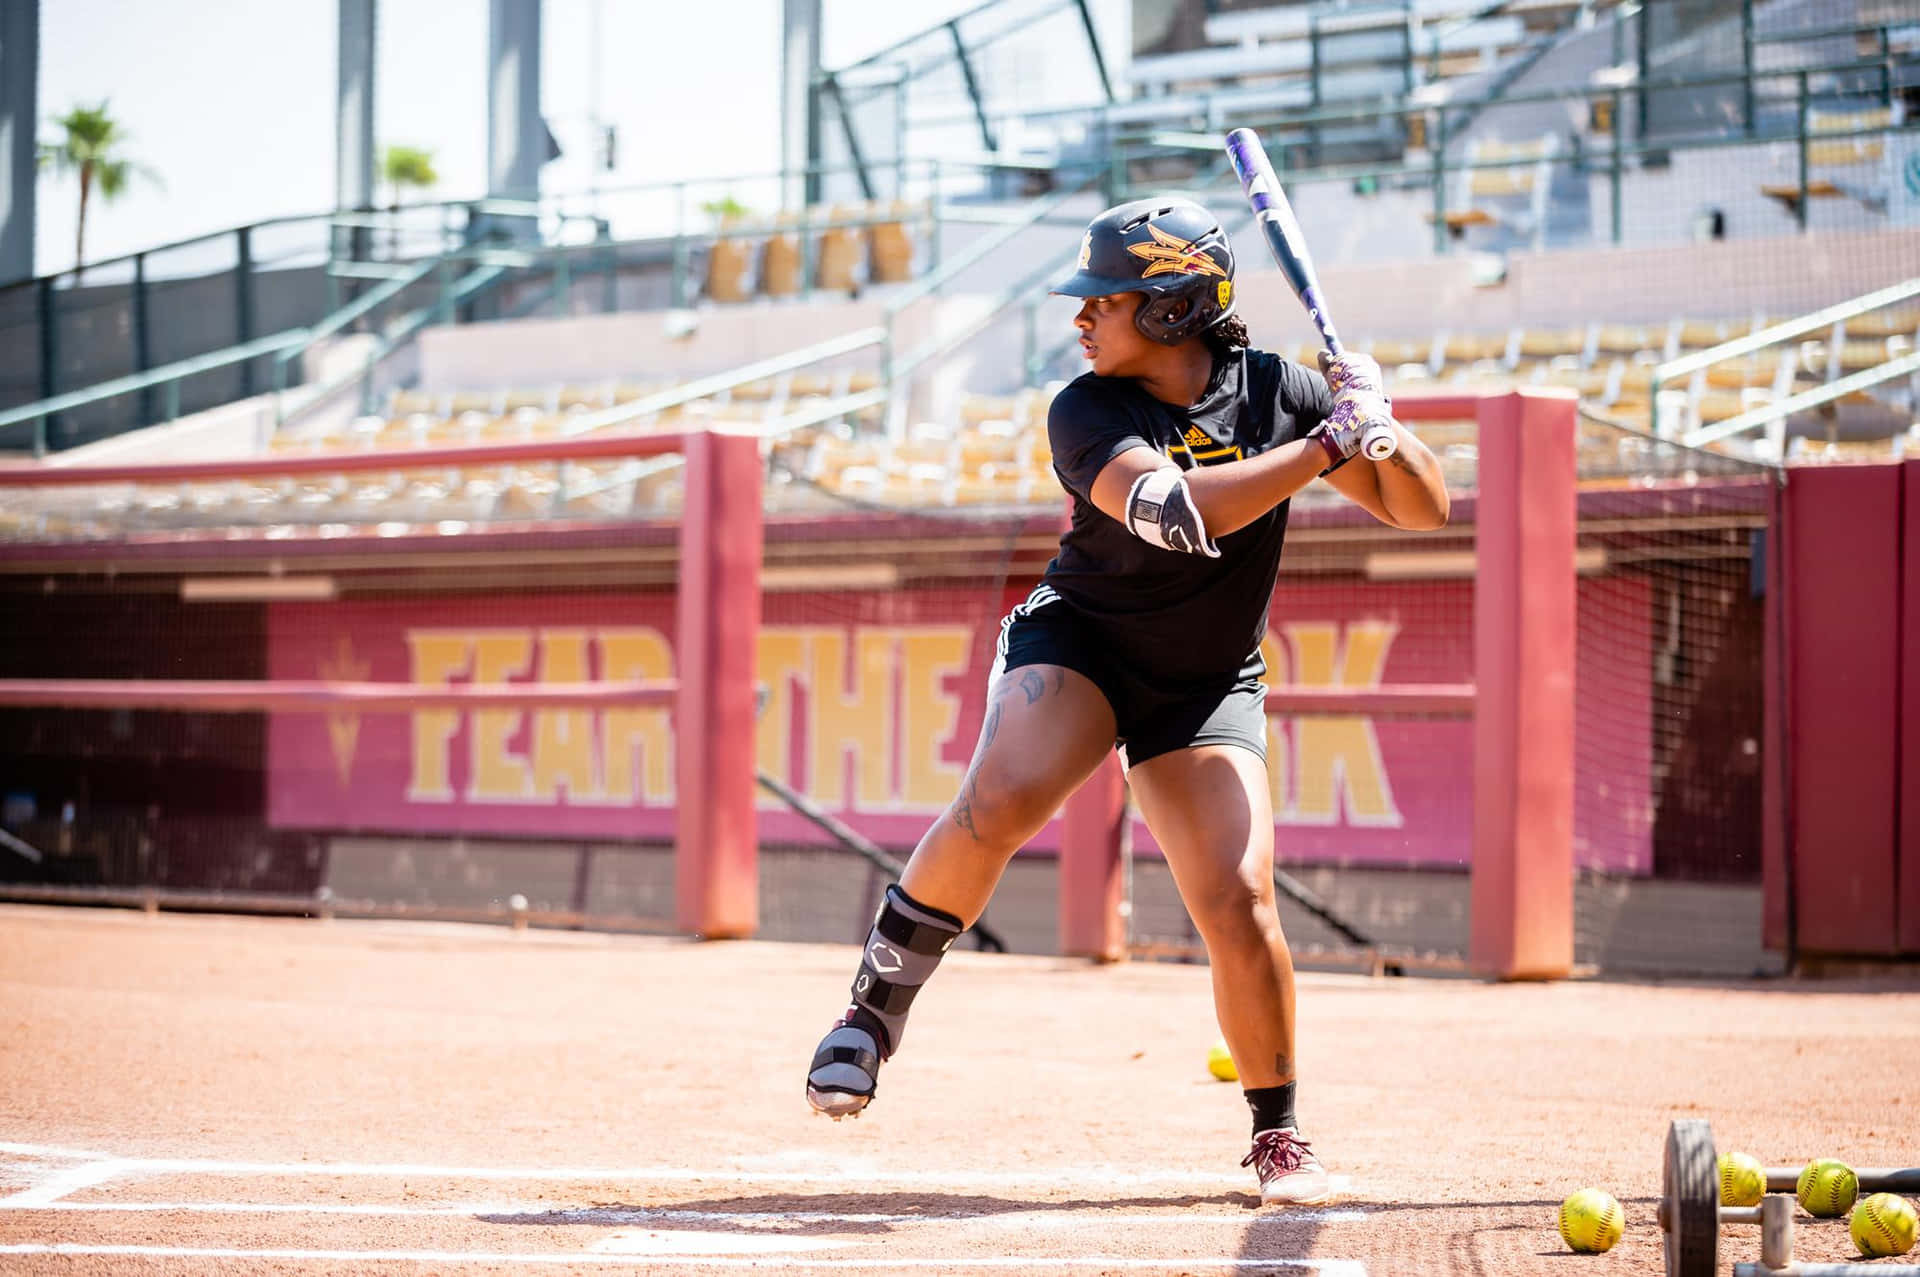 A Softball Player Swinging Her Bat At A Ball